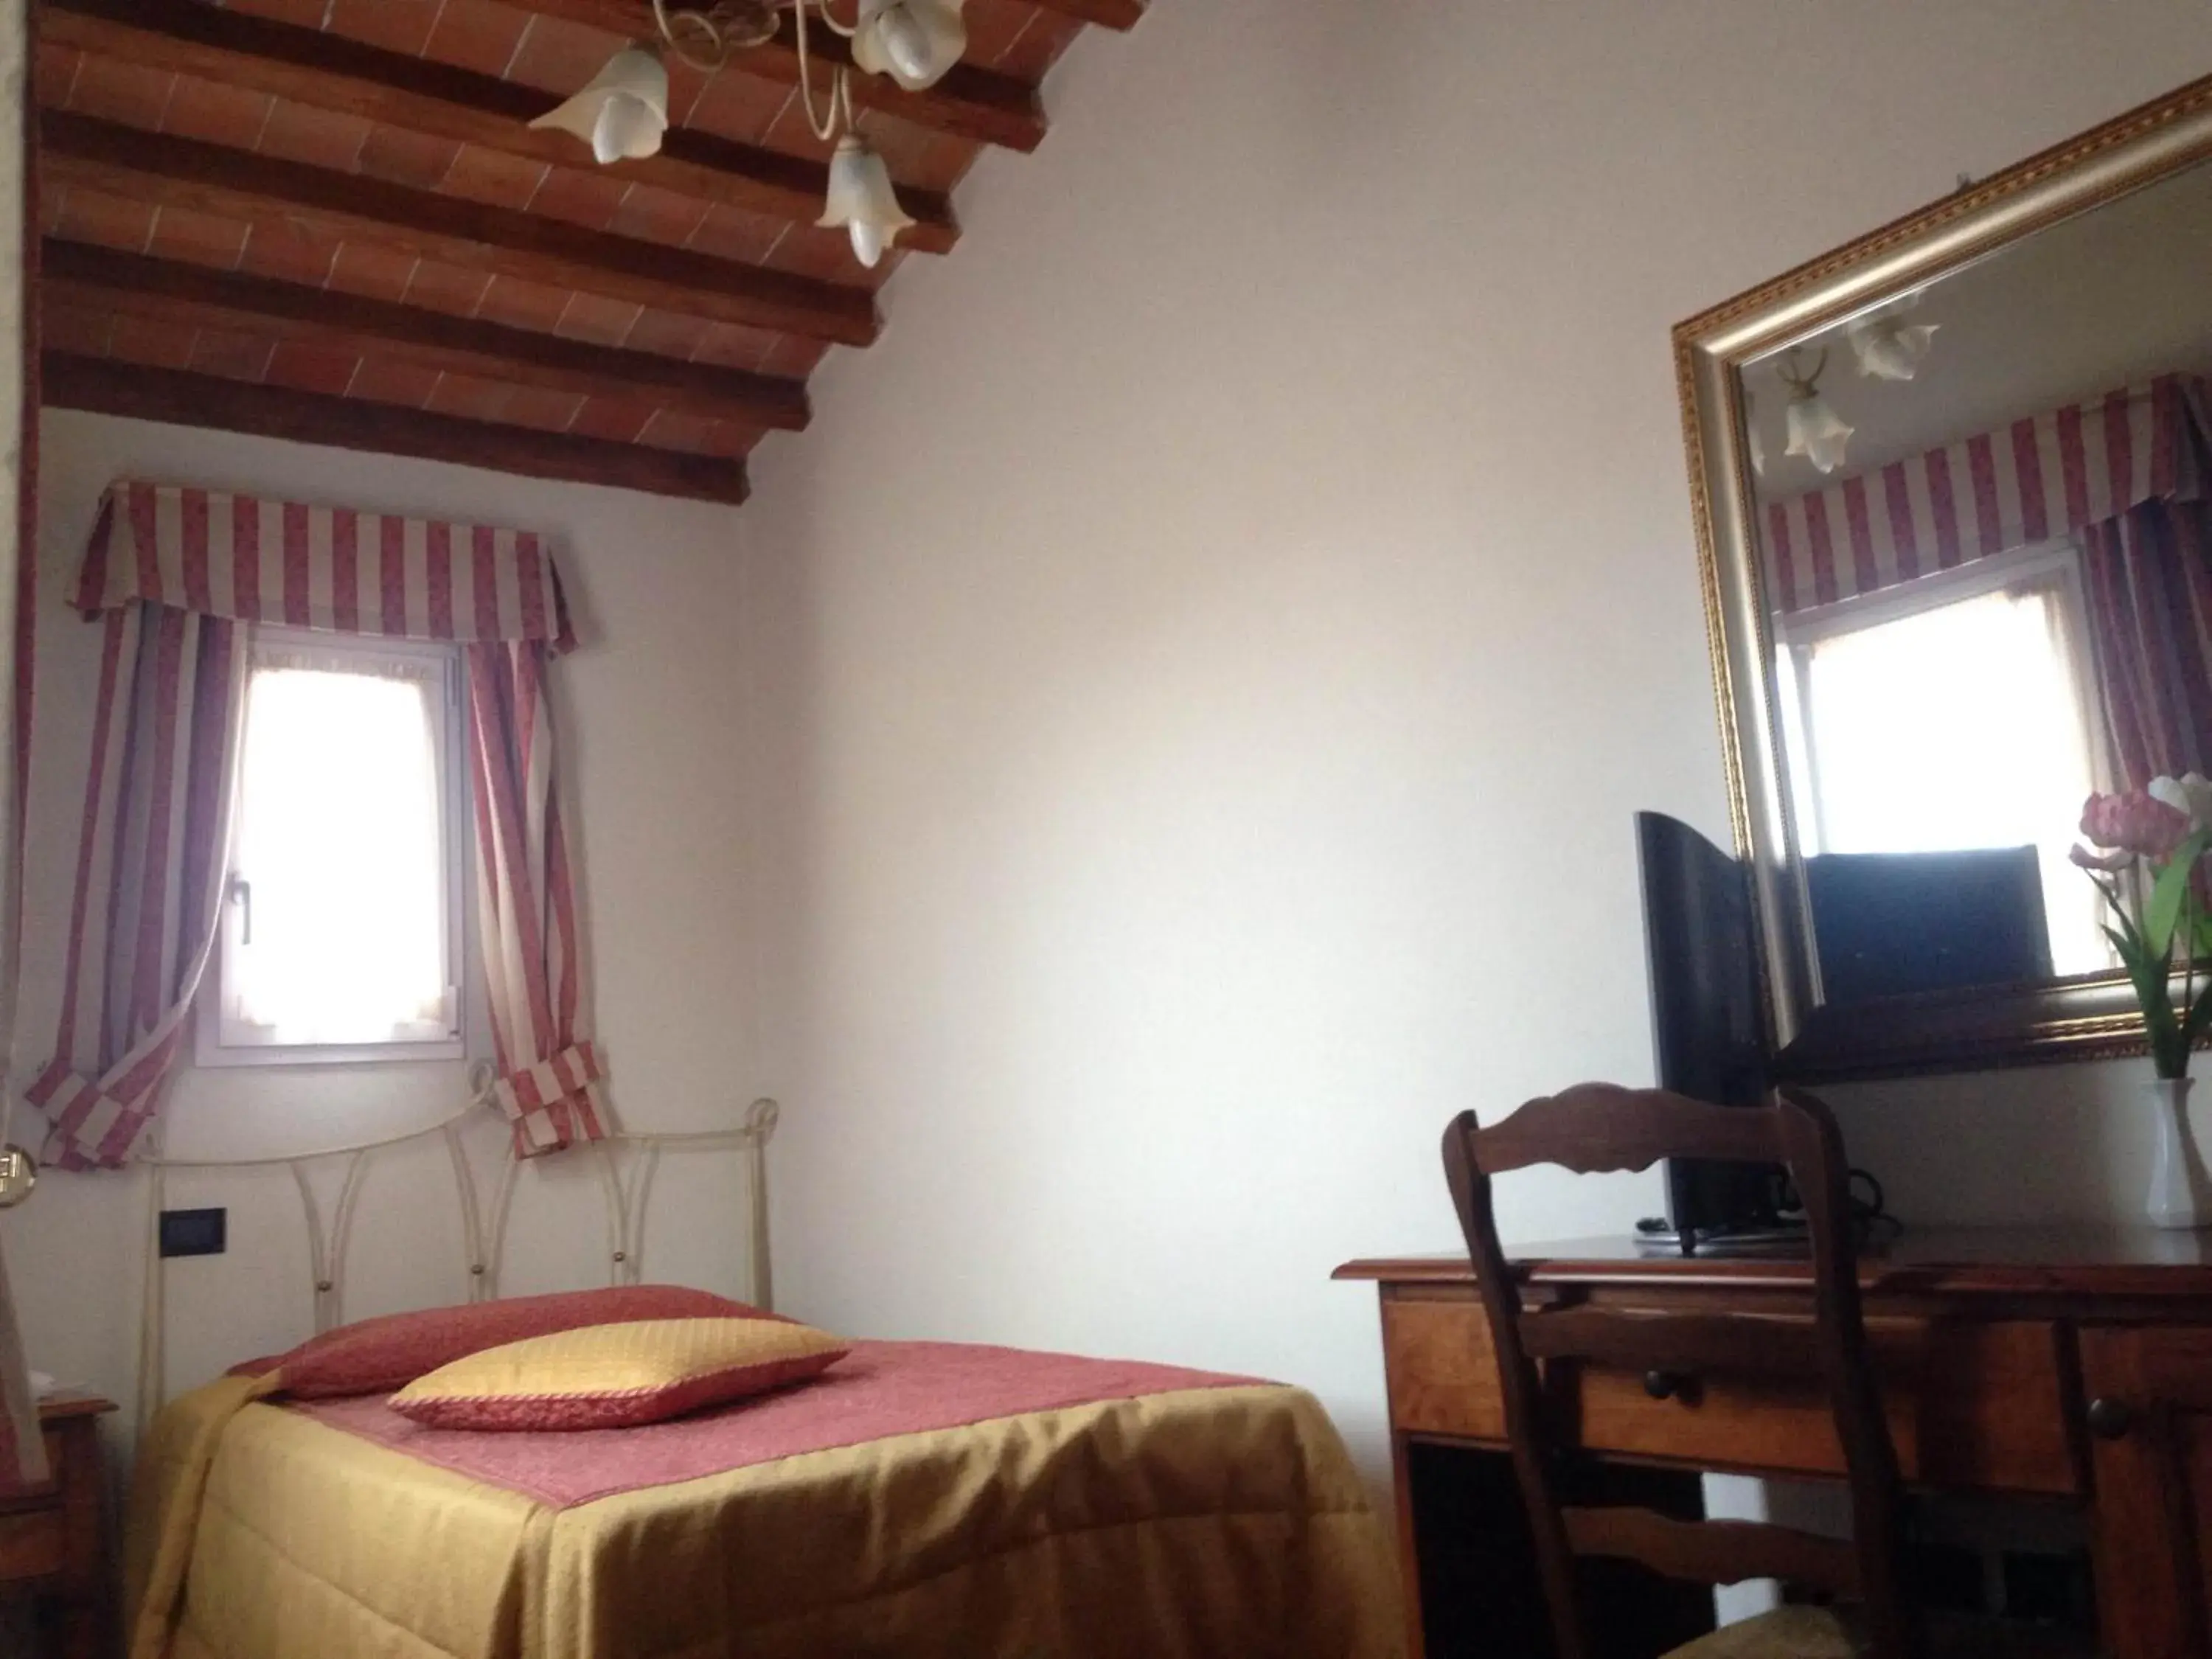 Bedroom, Room Photo in Hotel Di Stefano